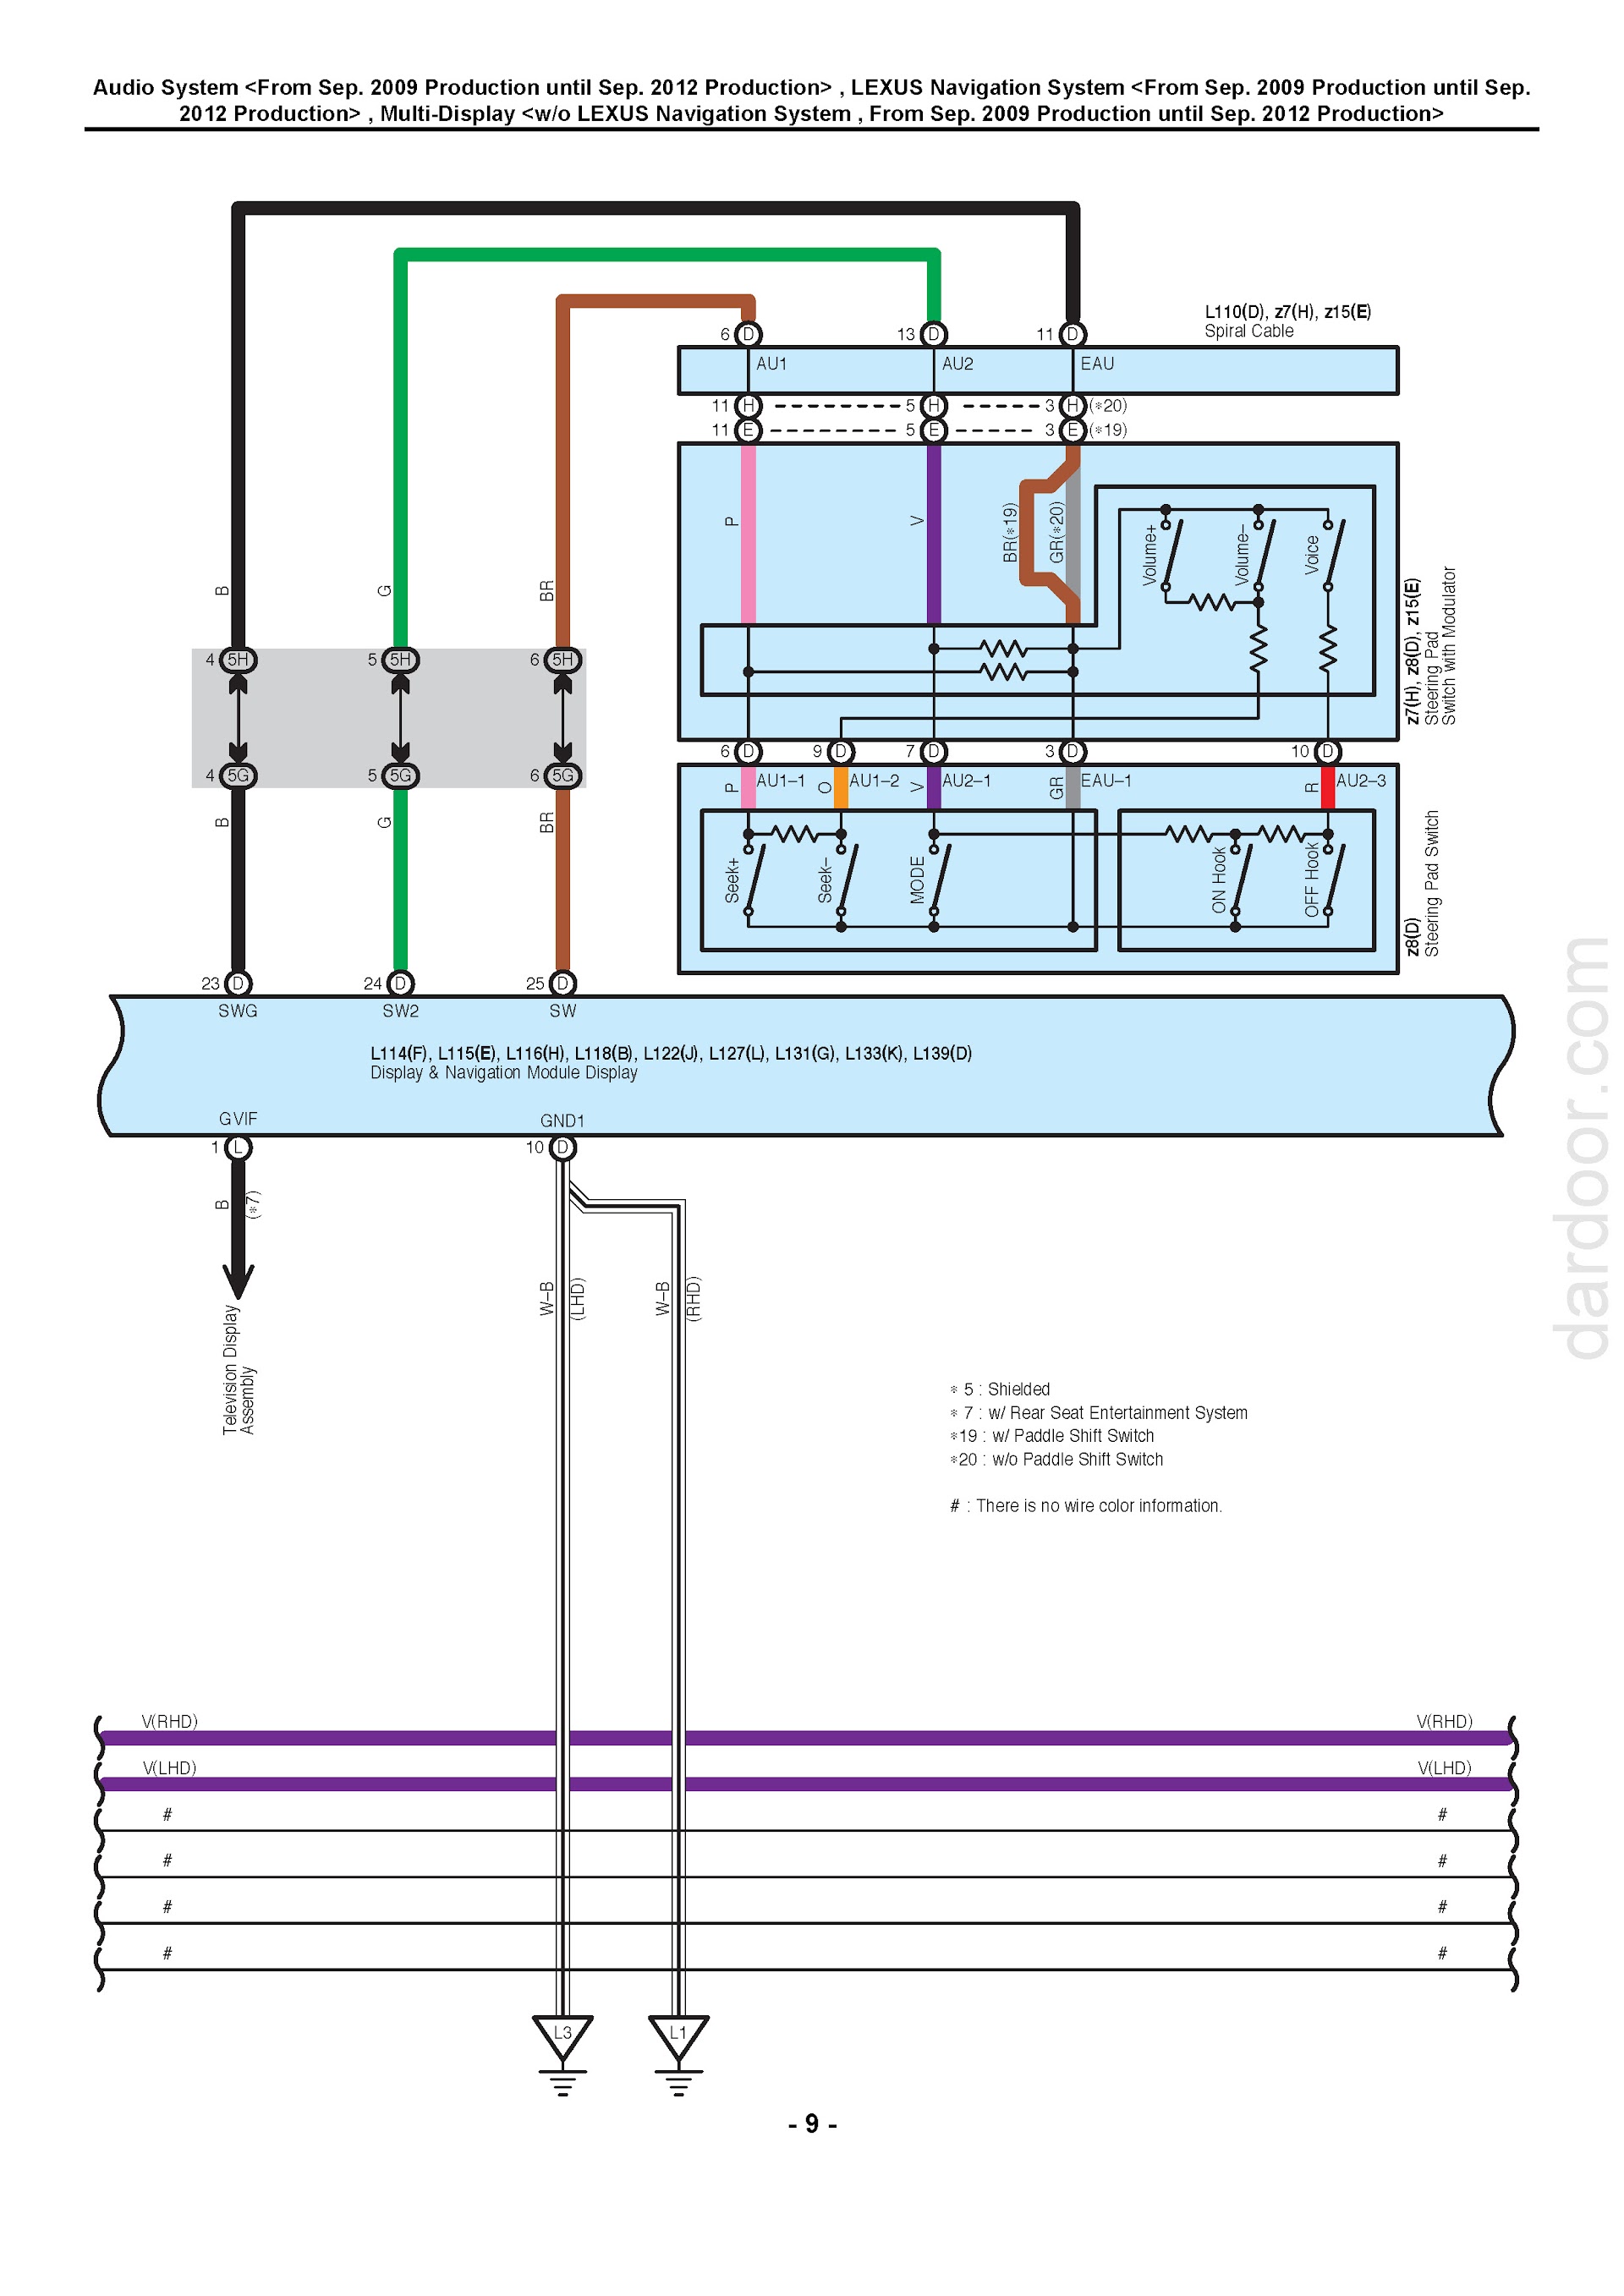 2014 Lexus Ls460 And Ls460L Wiring Diagram, Lexus Navigation System Wiring Diagram